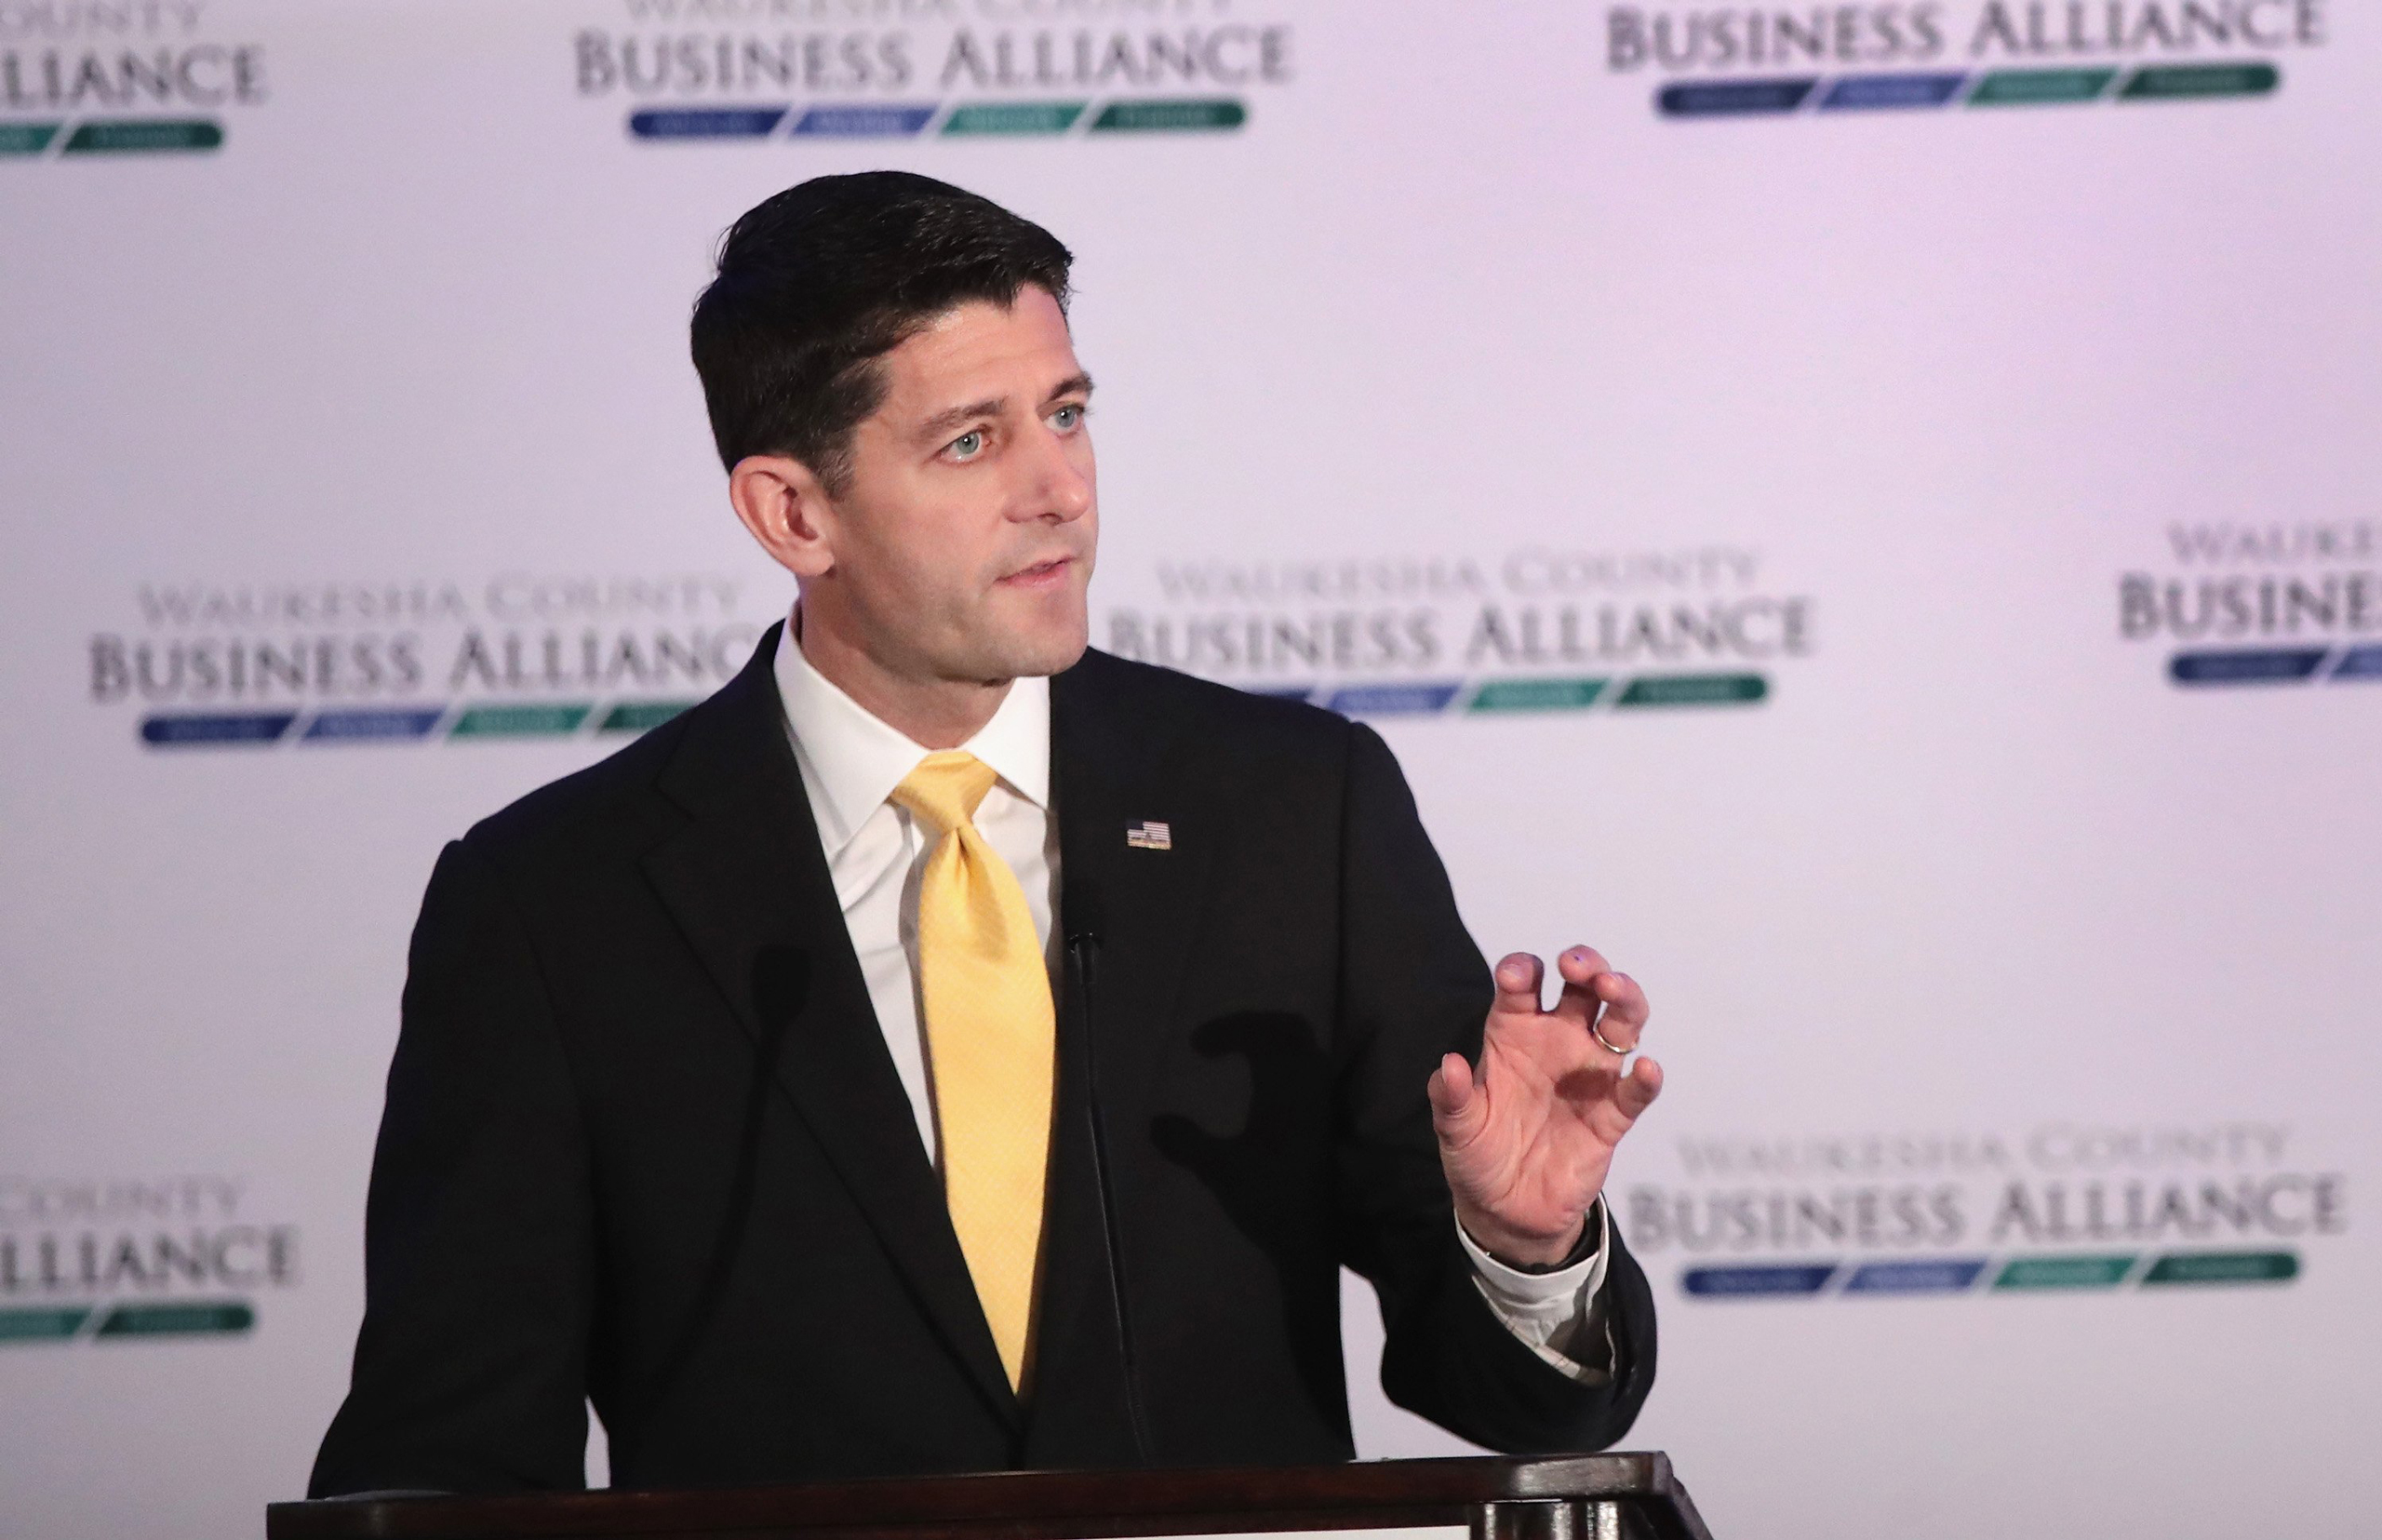 Paul Ryan Addresses Waukesha County Business Alliance In Wisconsin